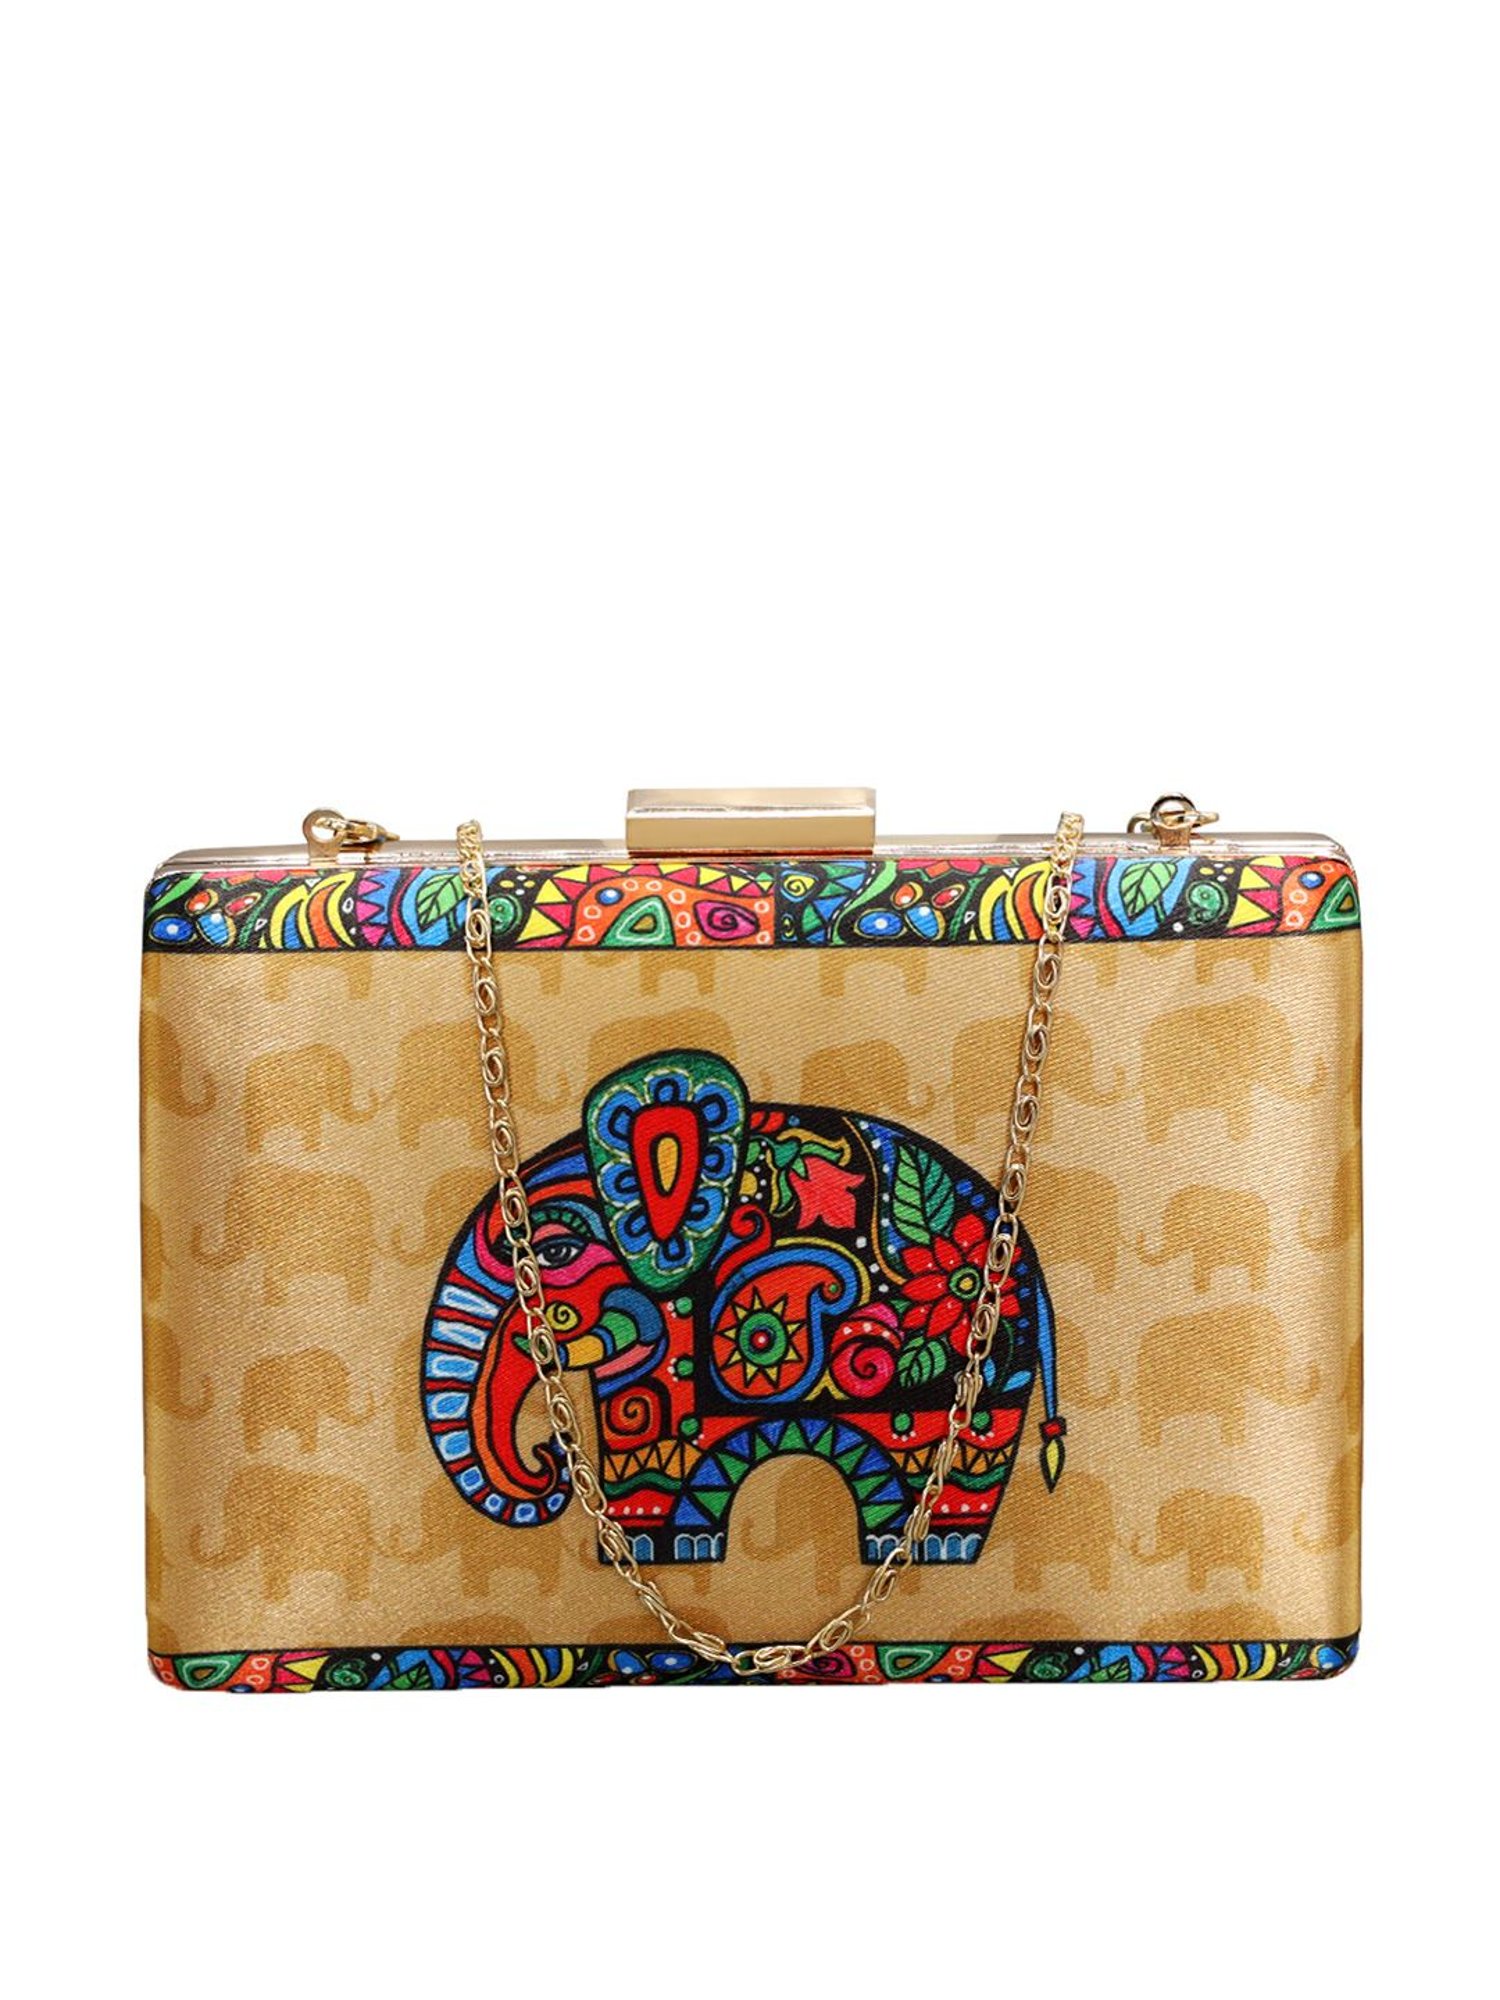 Buy All Things Sundar Sling Bag(Multicolor) on Flipkart | PaisaWapas.com